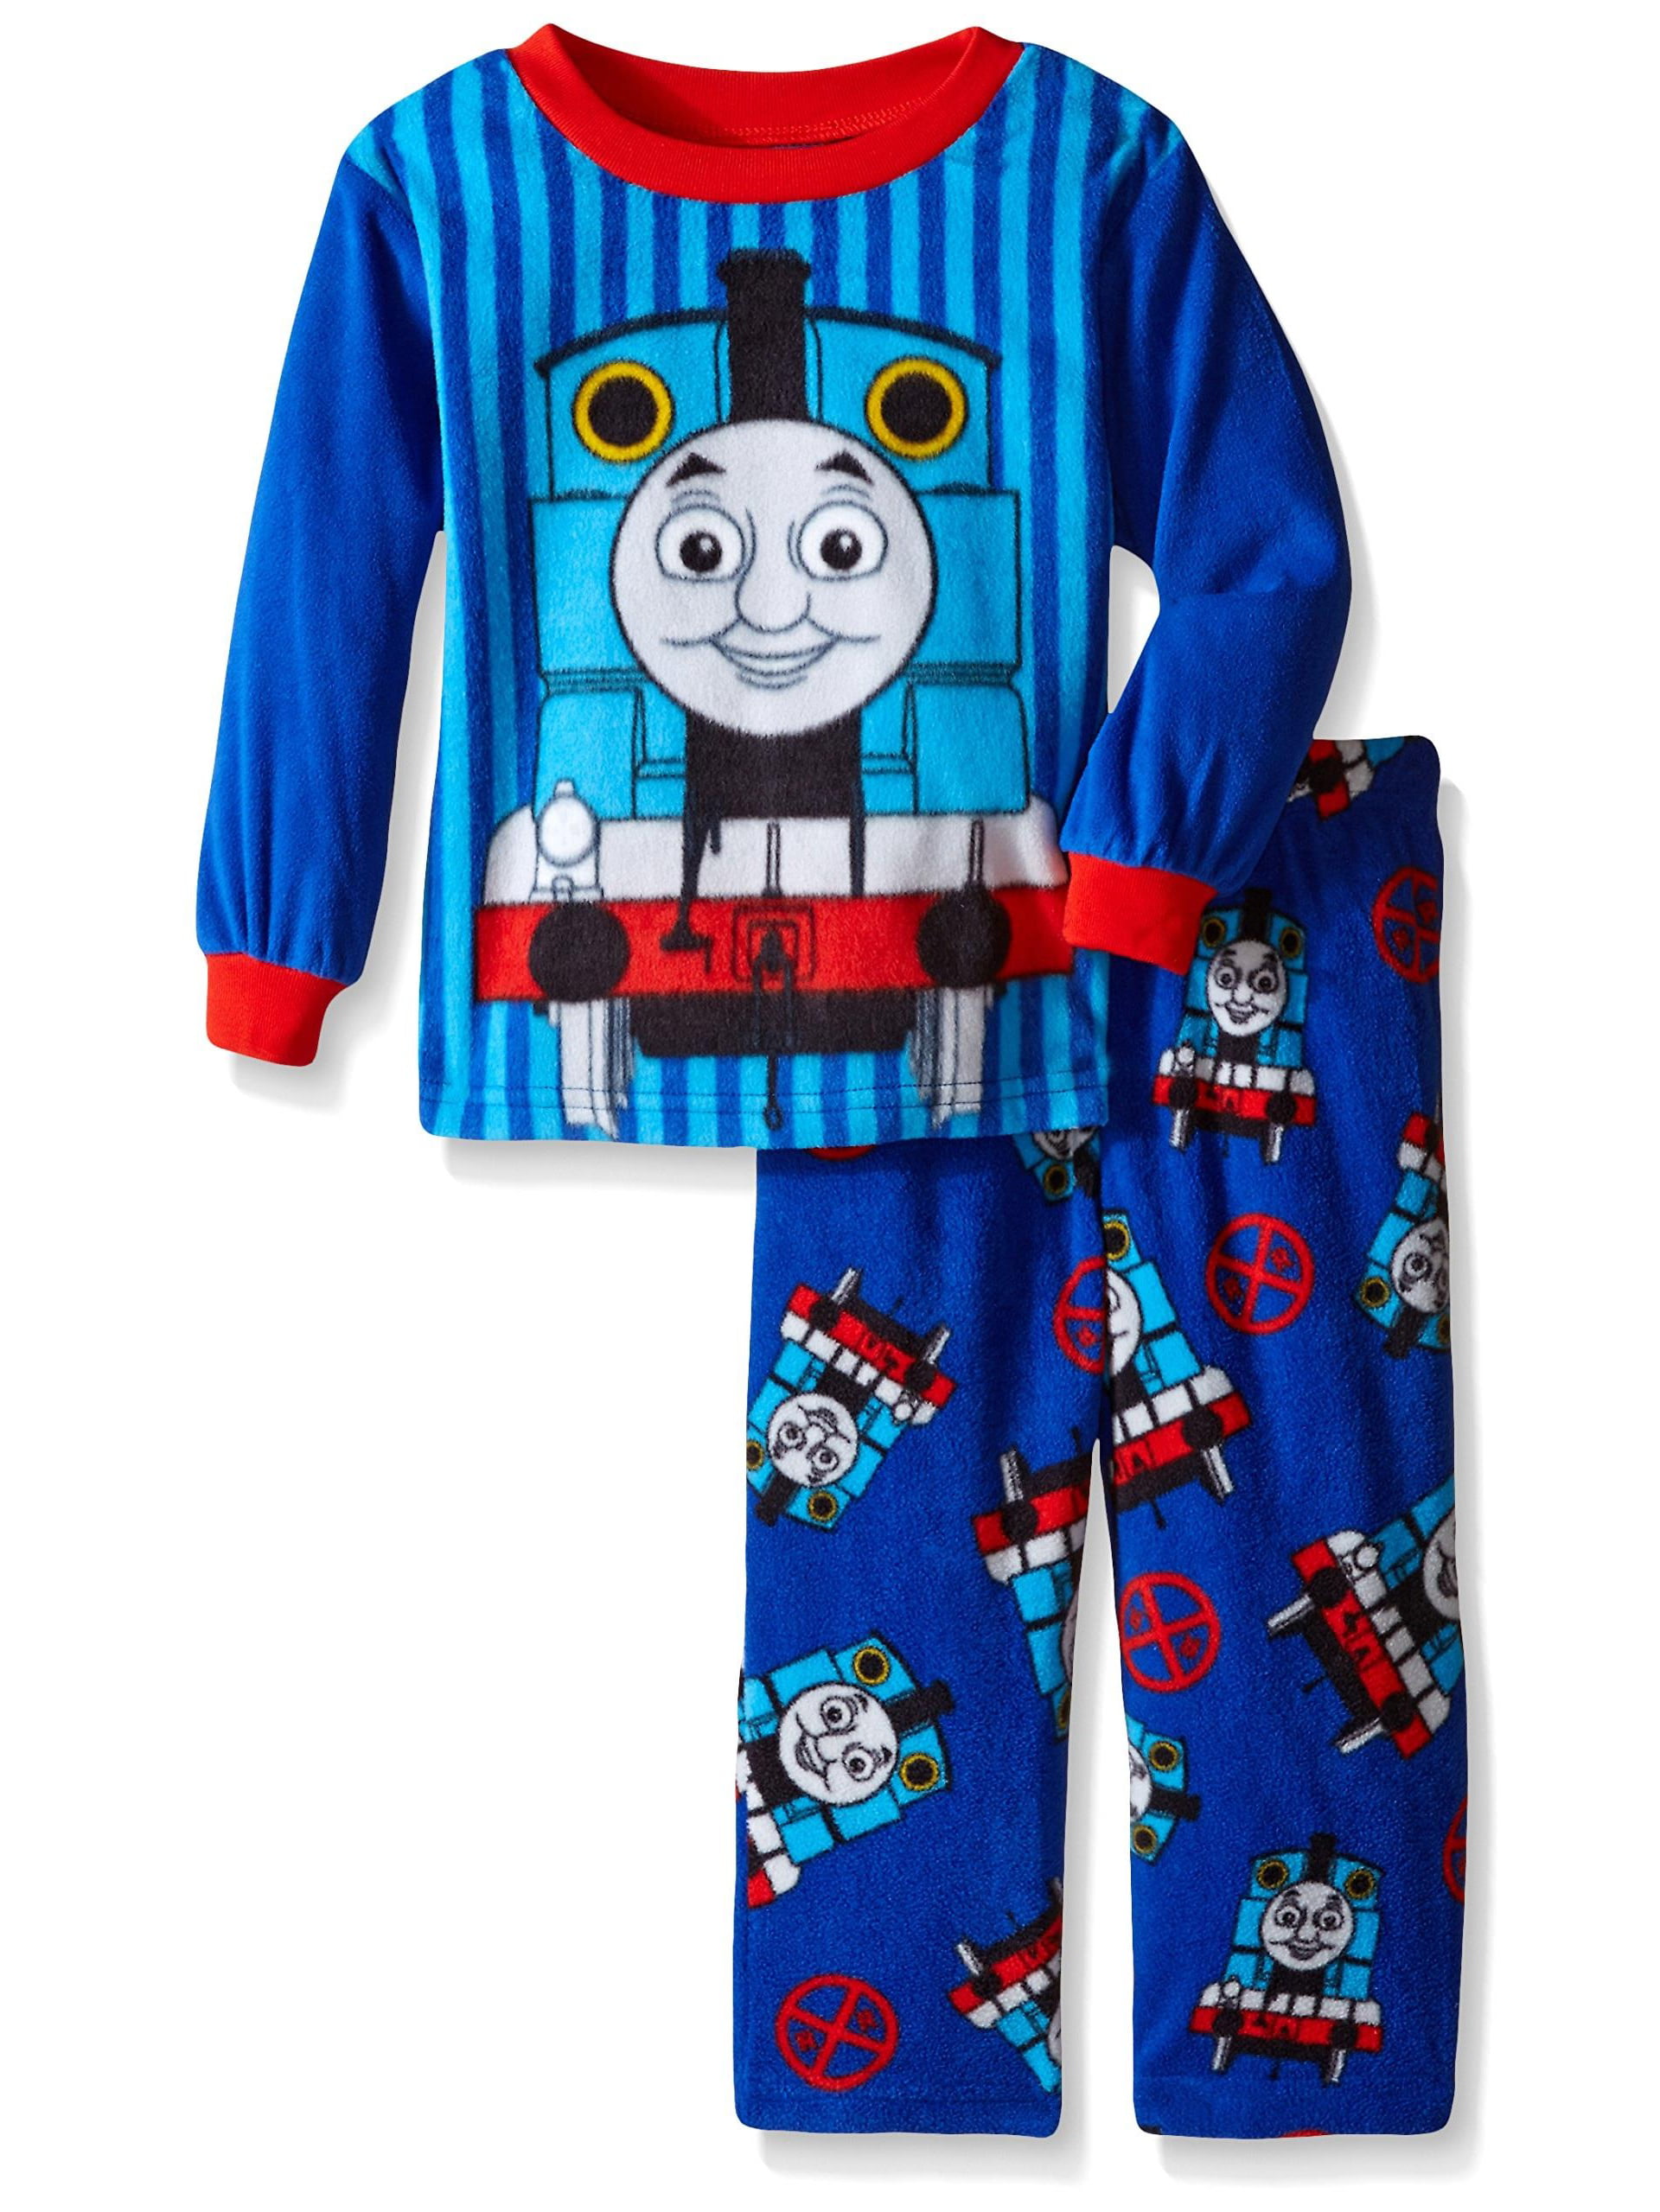 Thomas the Train Baby Boys Thomas Fleece Pajama Set 